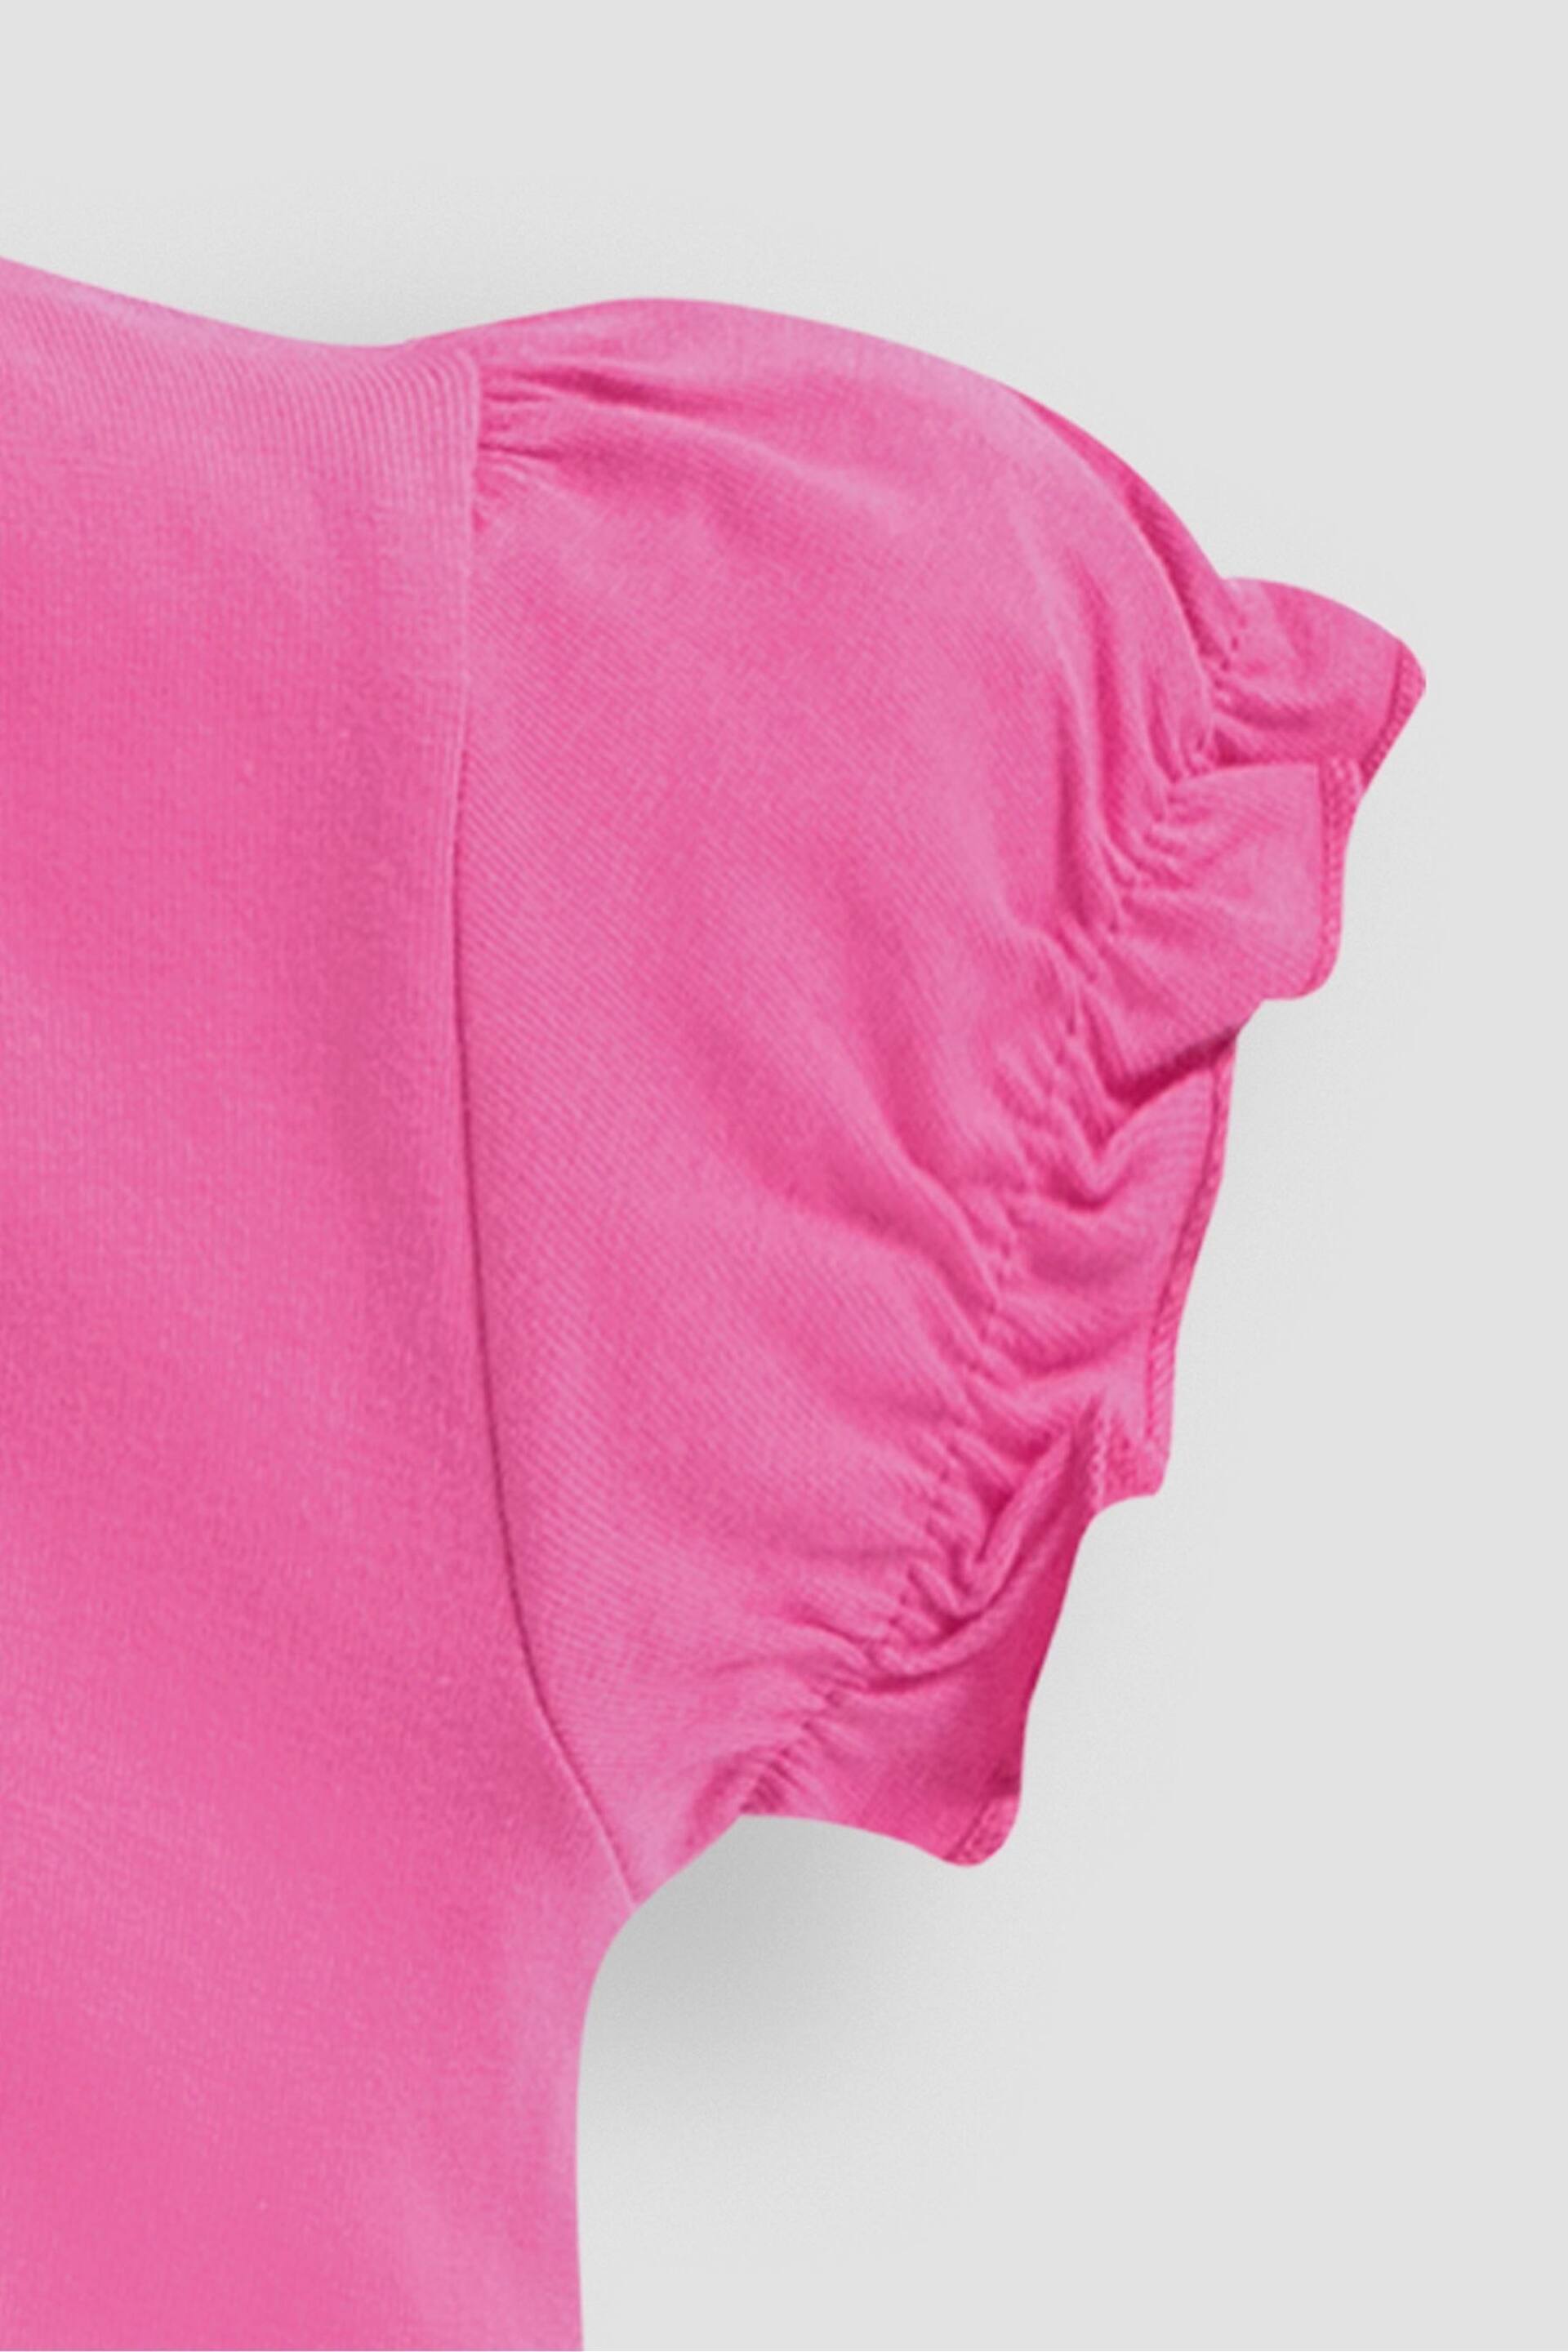 JoJo Maman Bébé Orchid Pink Pretty T-Shirt - Image 6 of 6